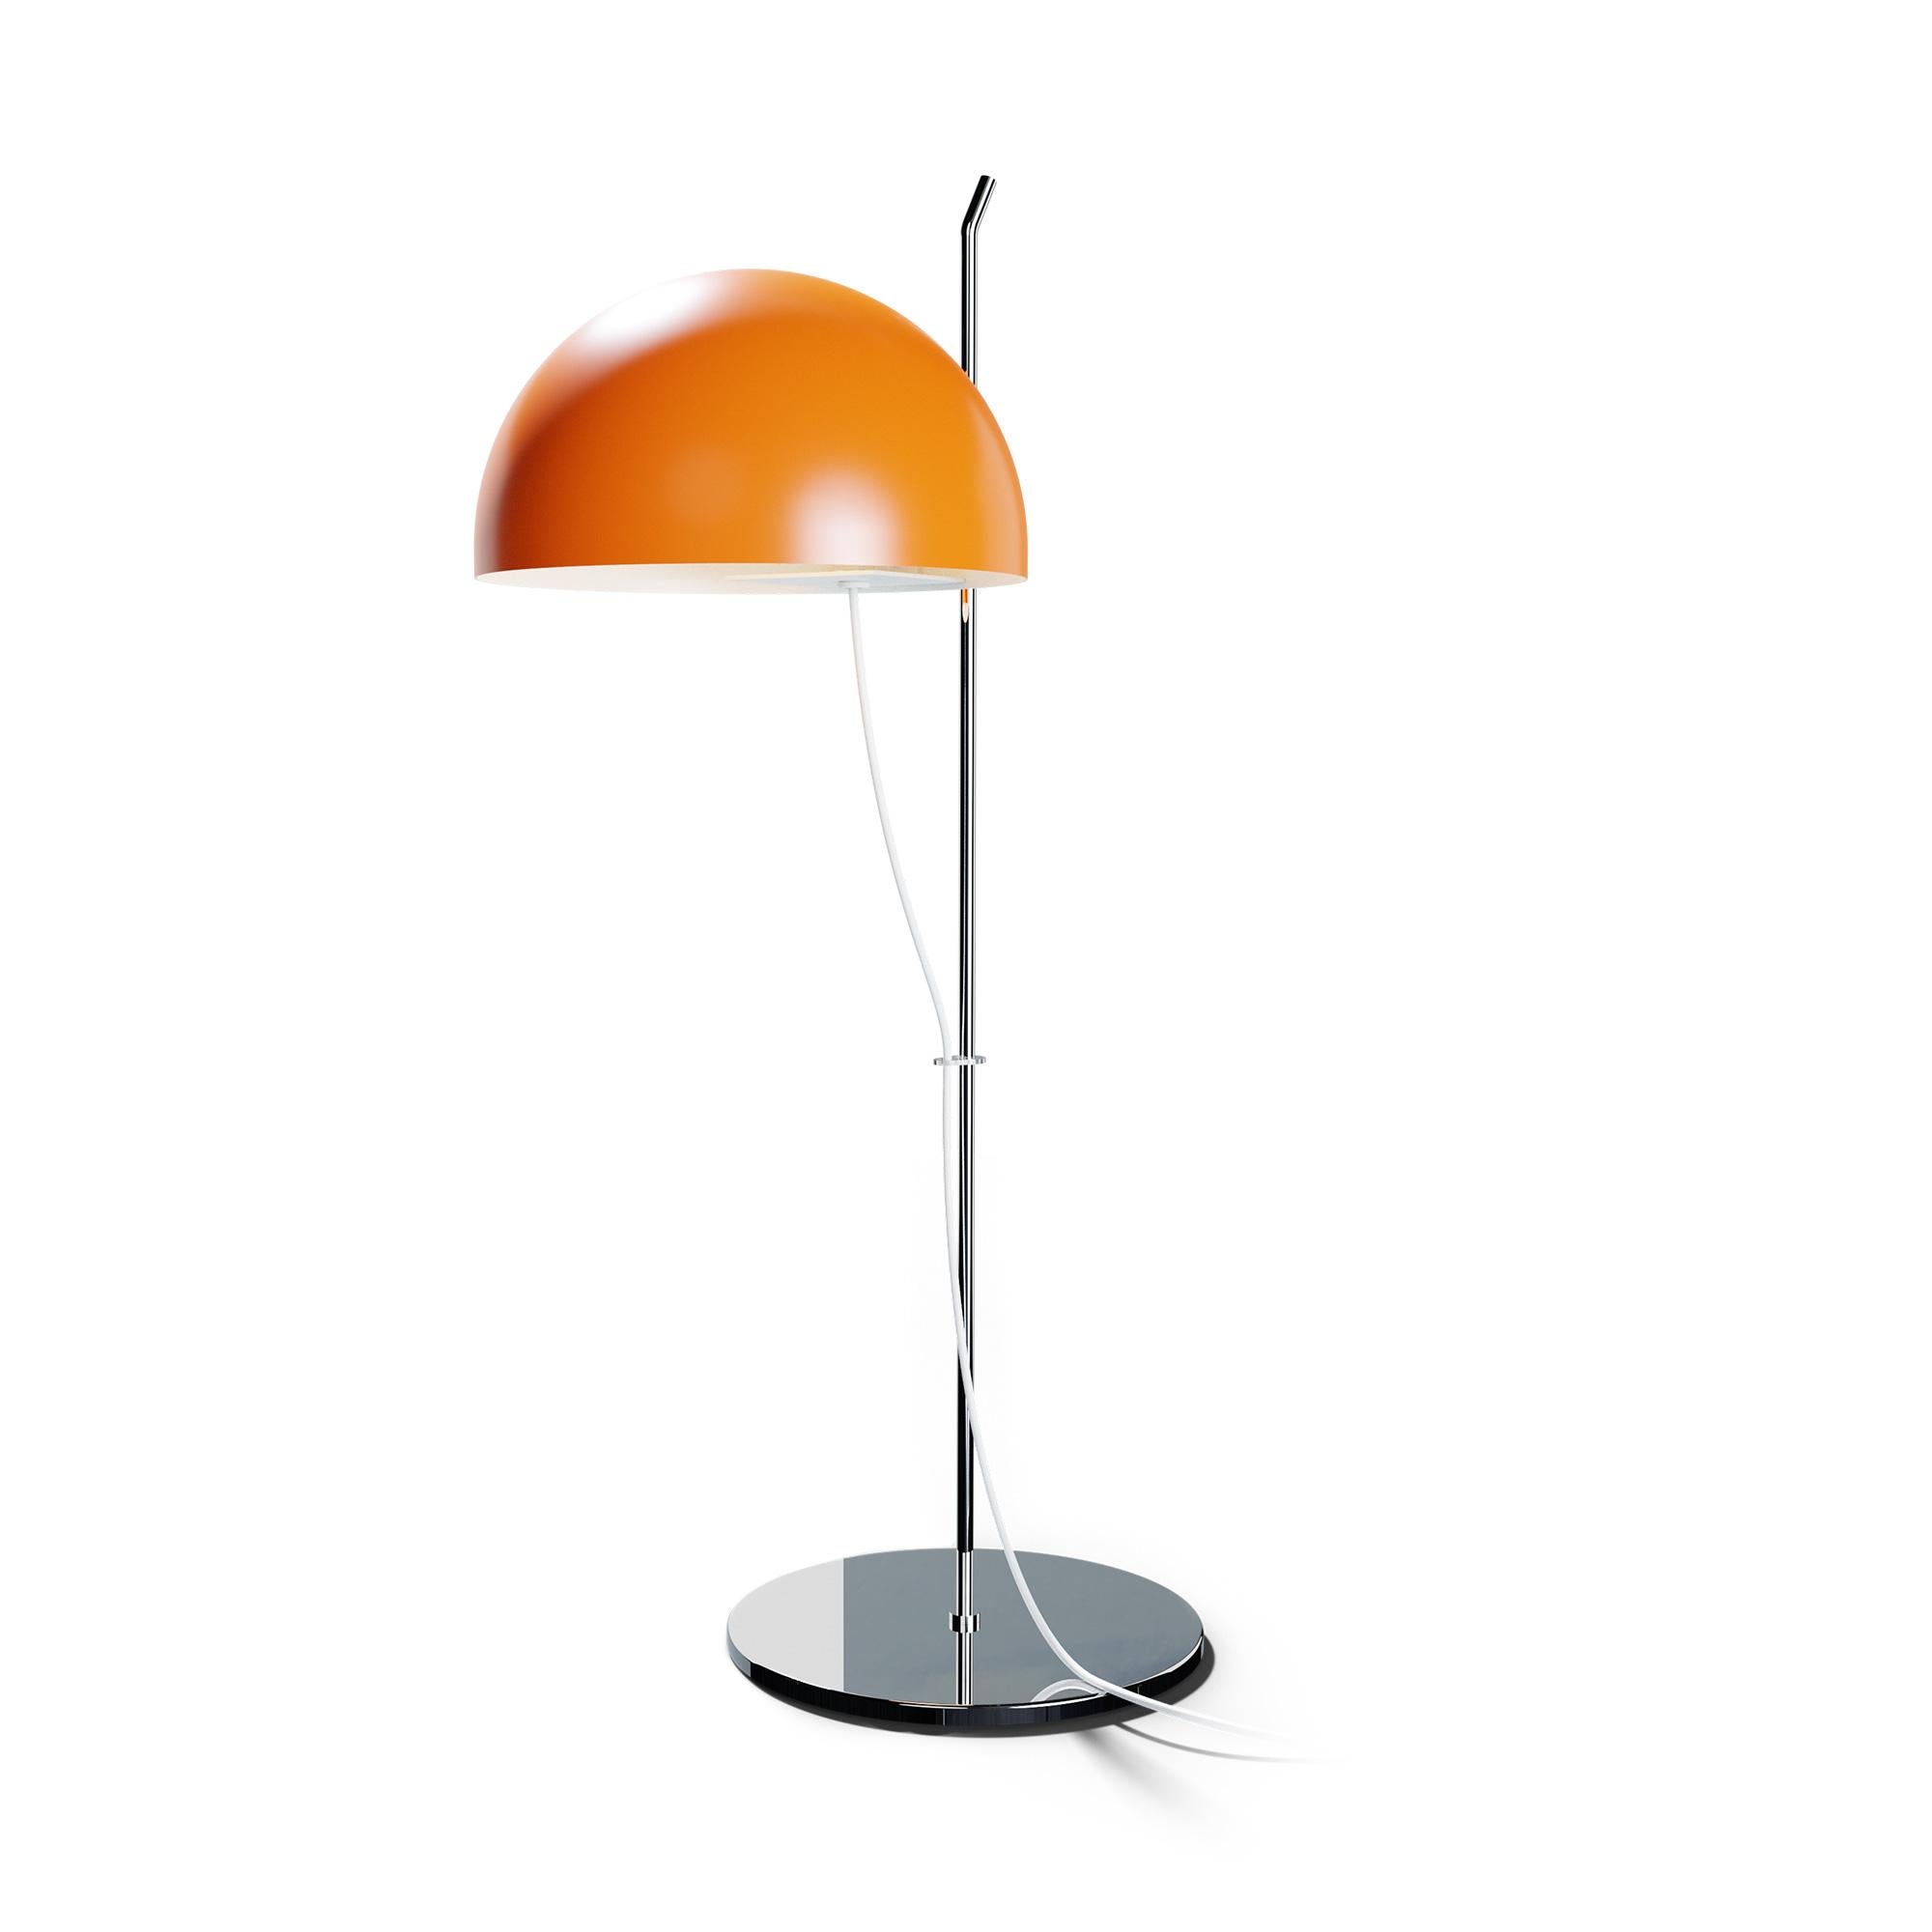 Laccato Lampada da scrivania 'A21' di Alain Richard in arancione per Disderot in vendita